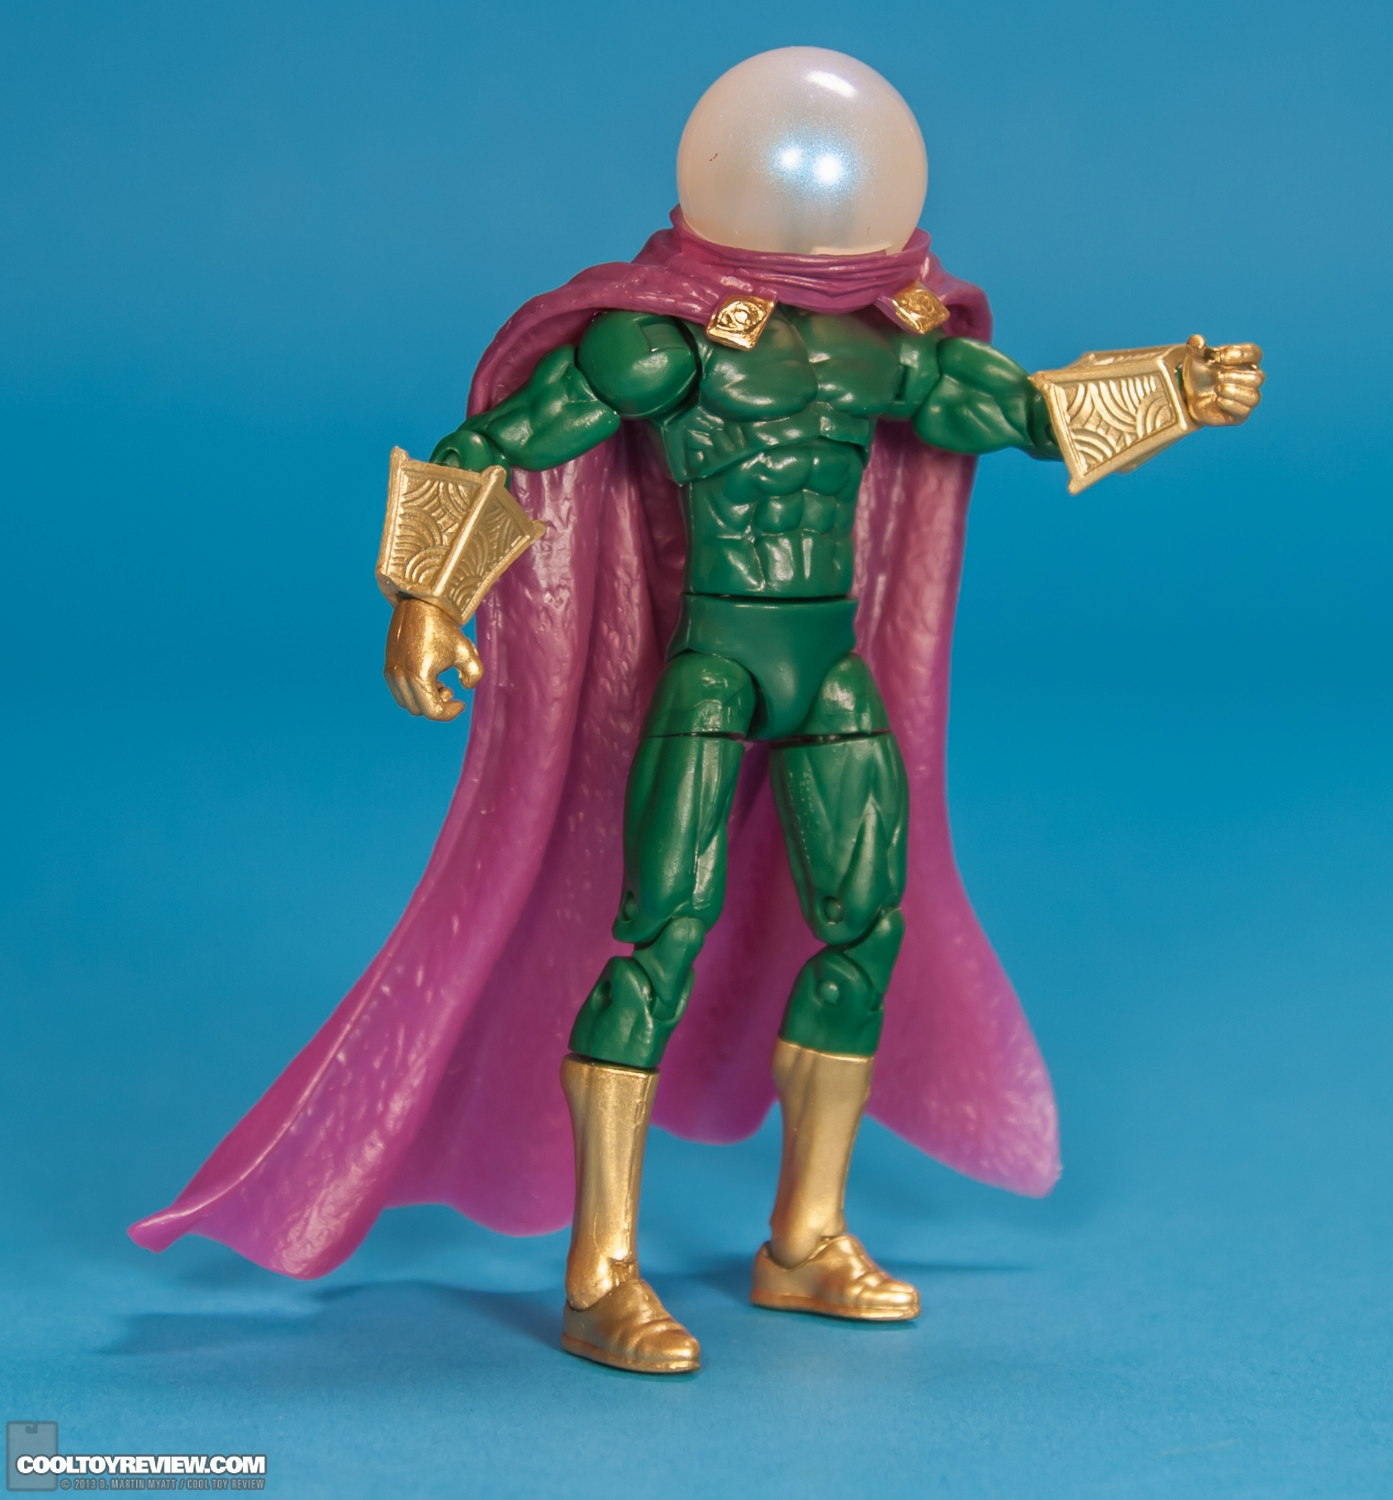 Series-5-05-Mysterio-Marvel-Universe-Hasbro-2013-002.jpg